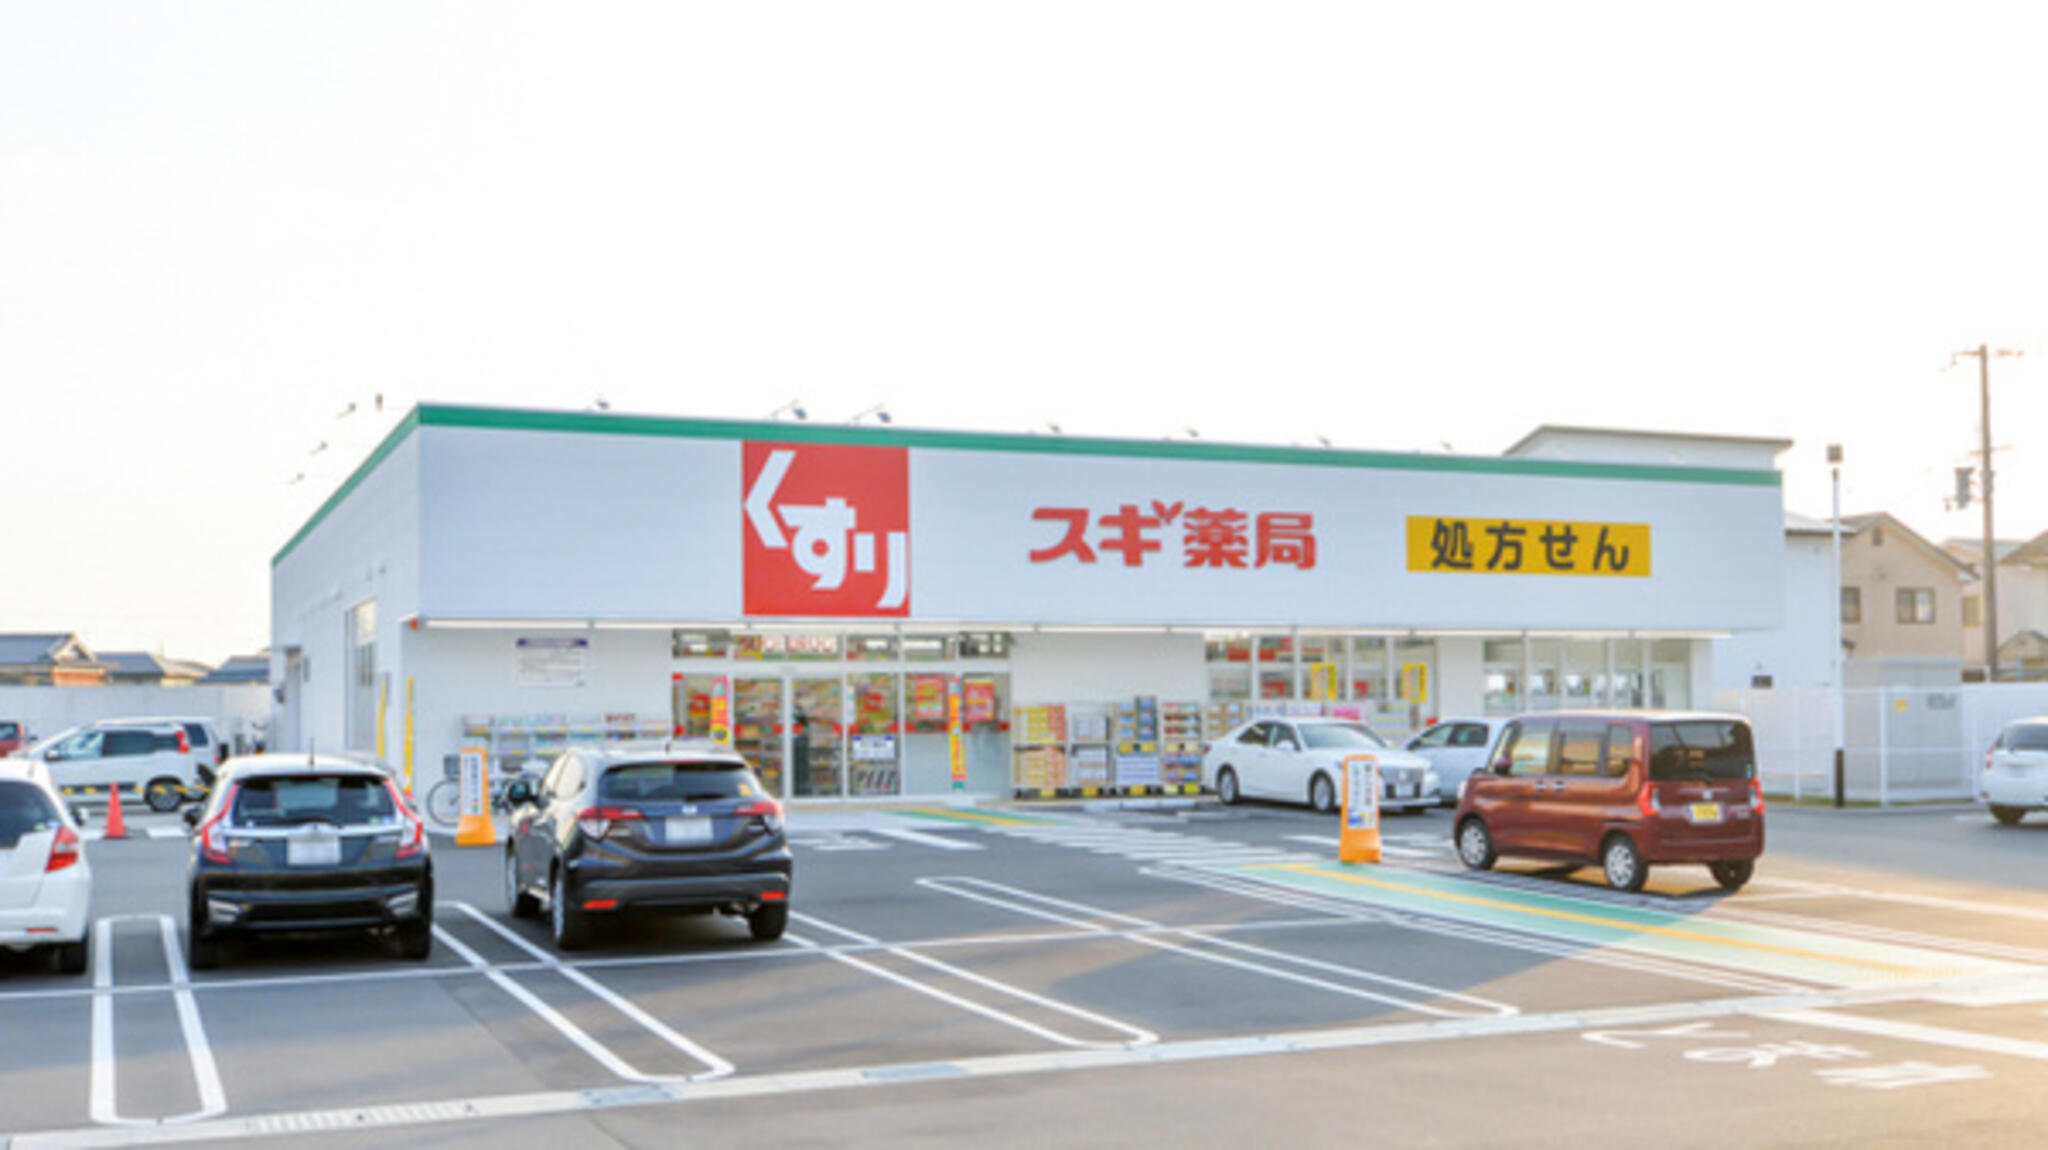 スギ薬局 姫路広峰店の代表写真3